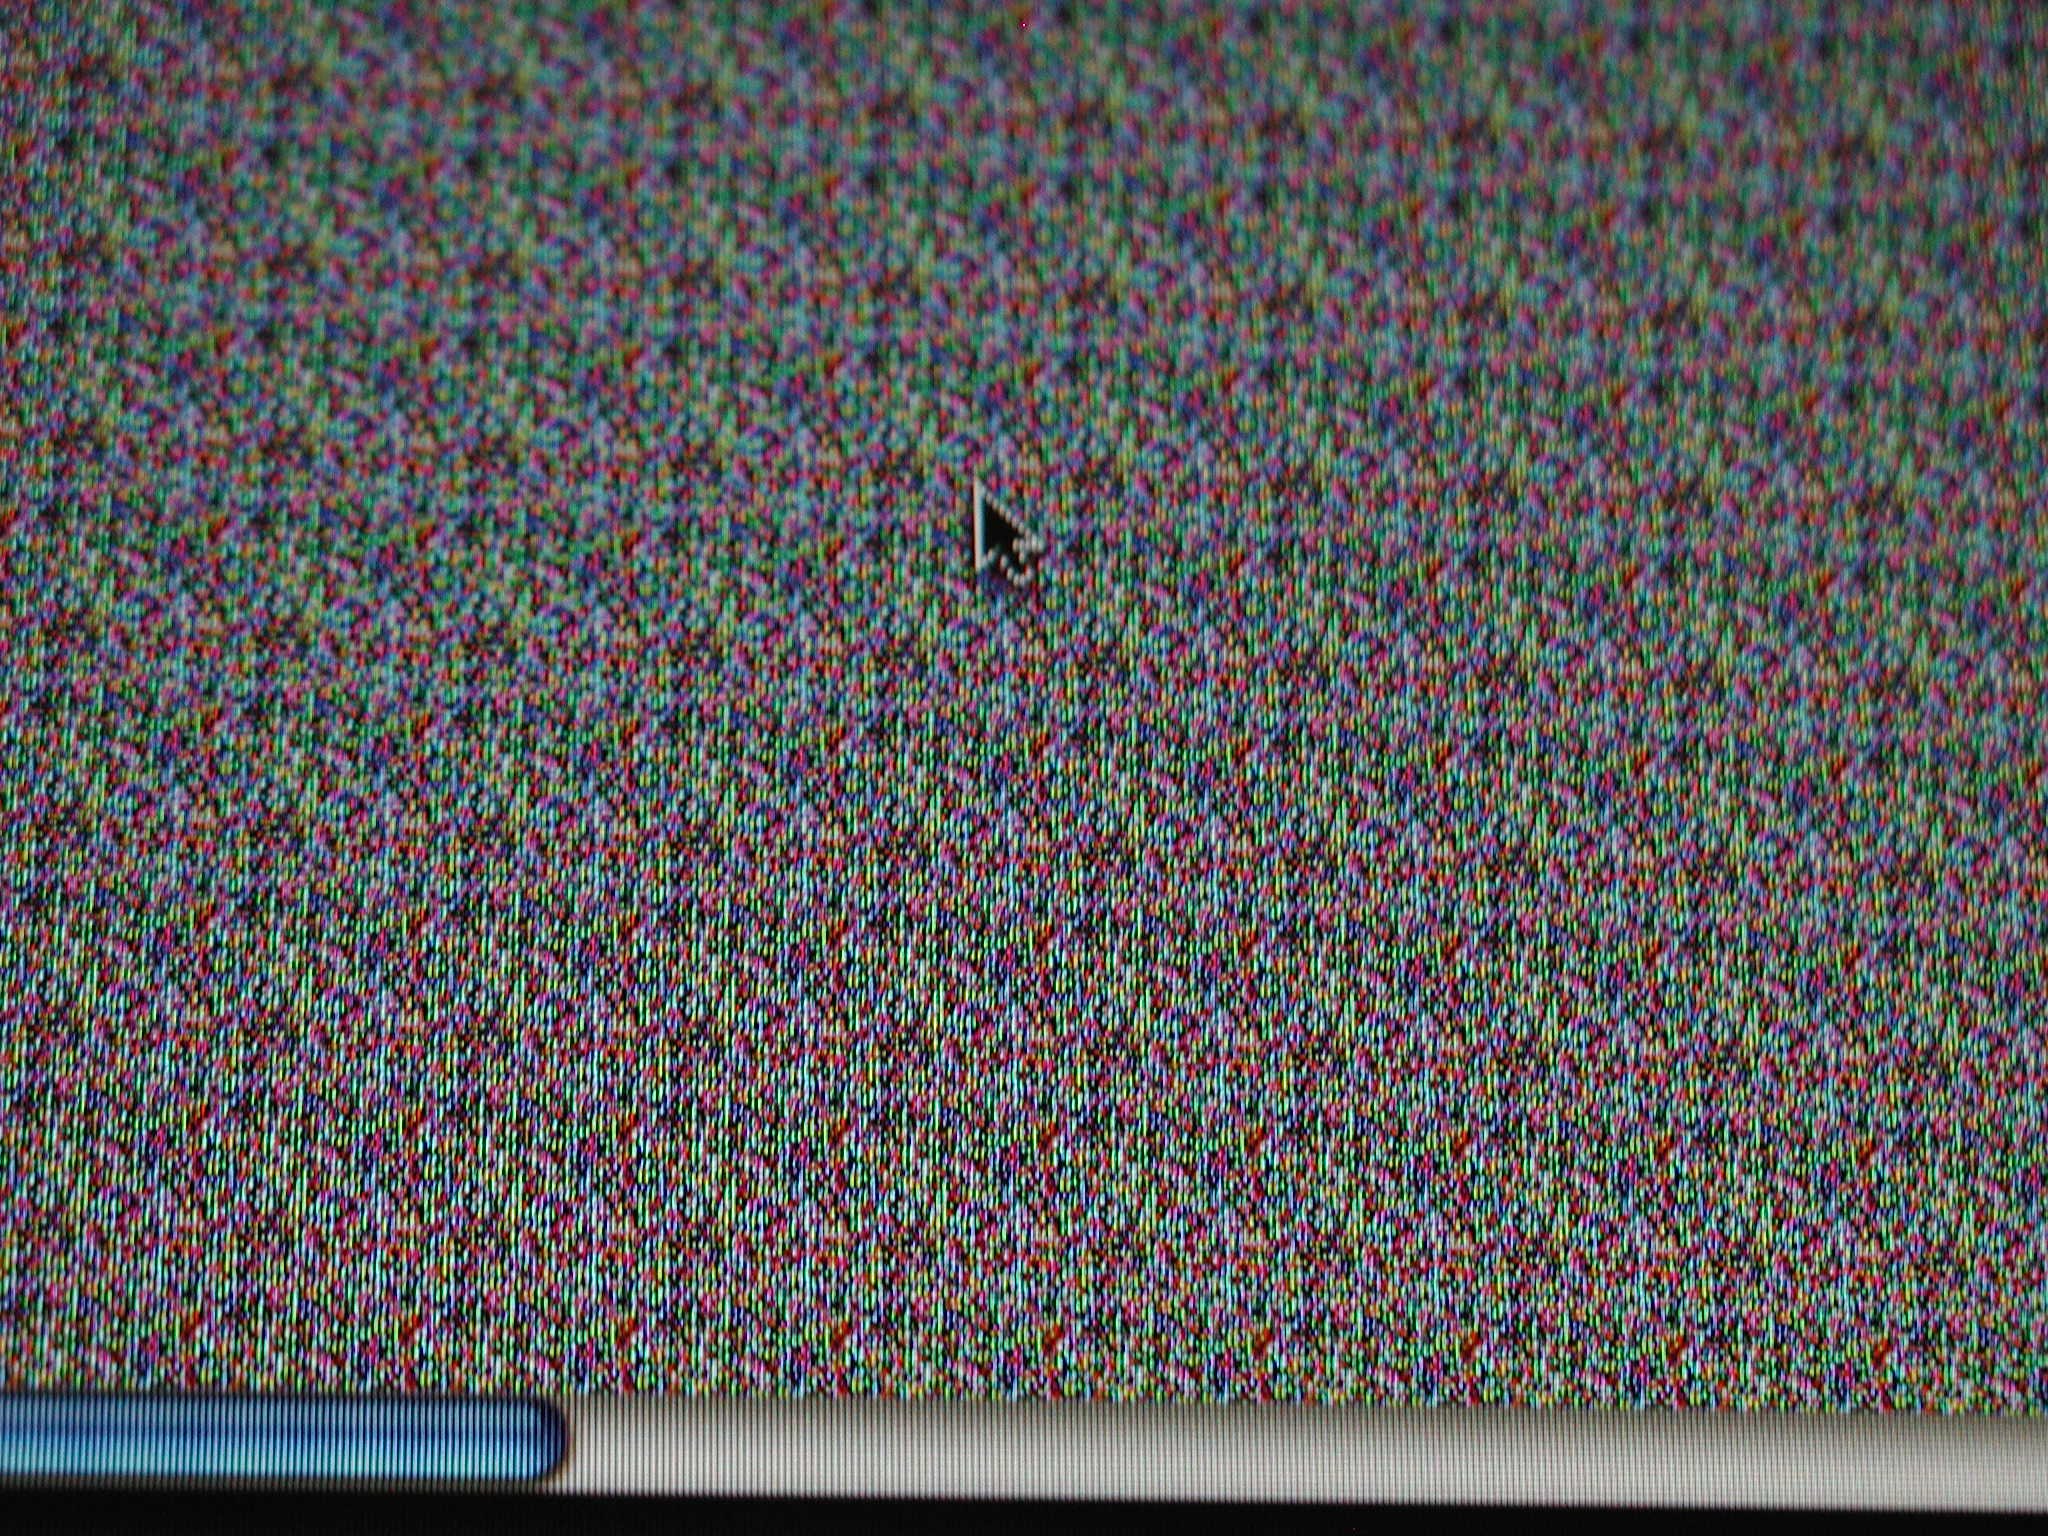 Разбиты пиксели. Пиксели на телевизоре. Пиксели на мониторе. Битые пиксели. Разноцветные точки на и кране.